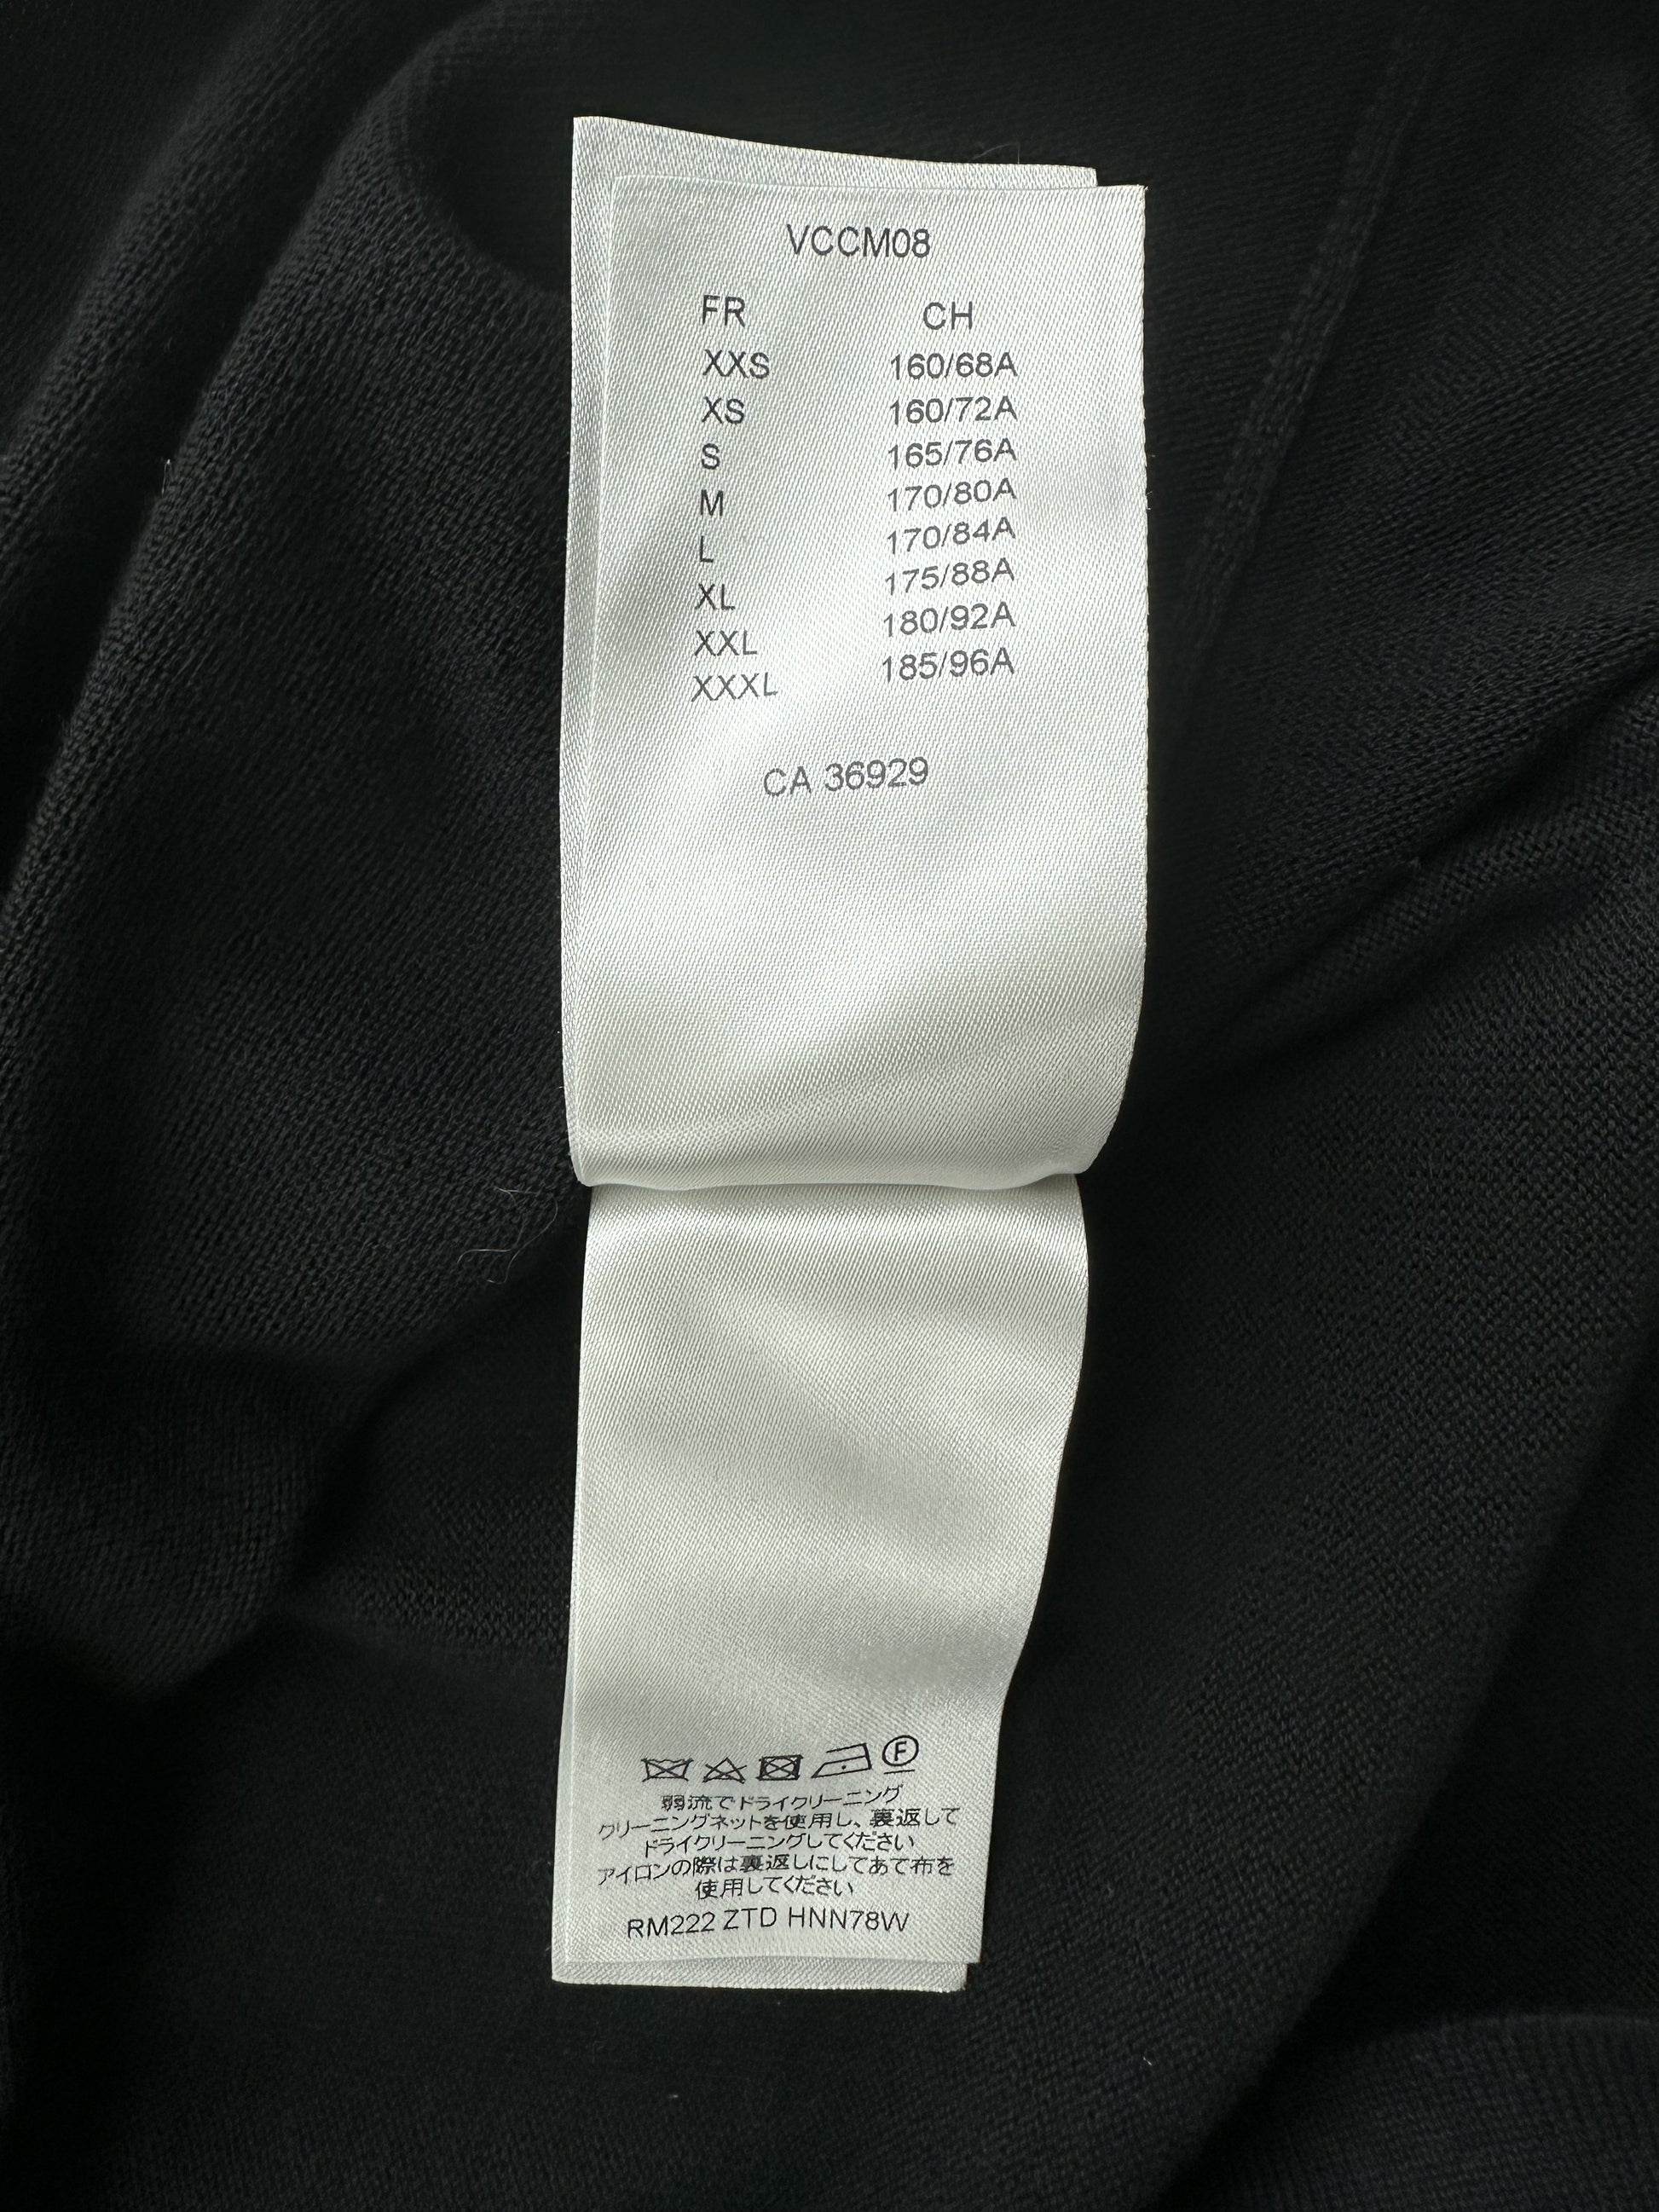 Louis Vuitton 1854 Graphic Knit T-Shirt Size Medium